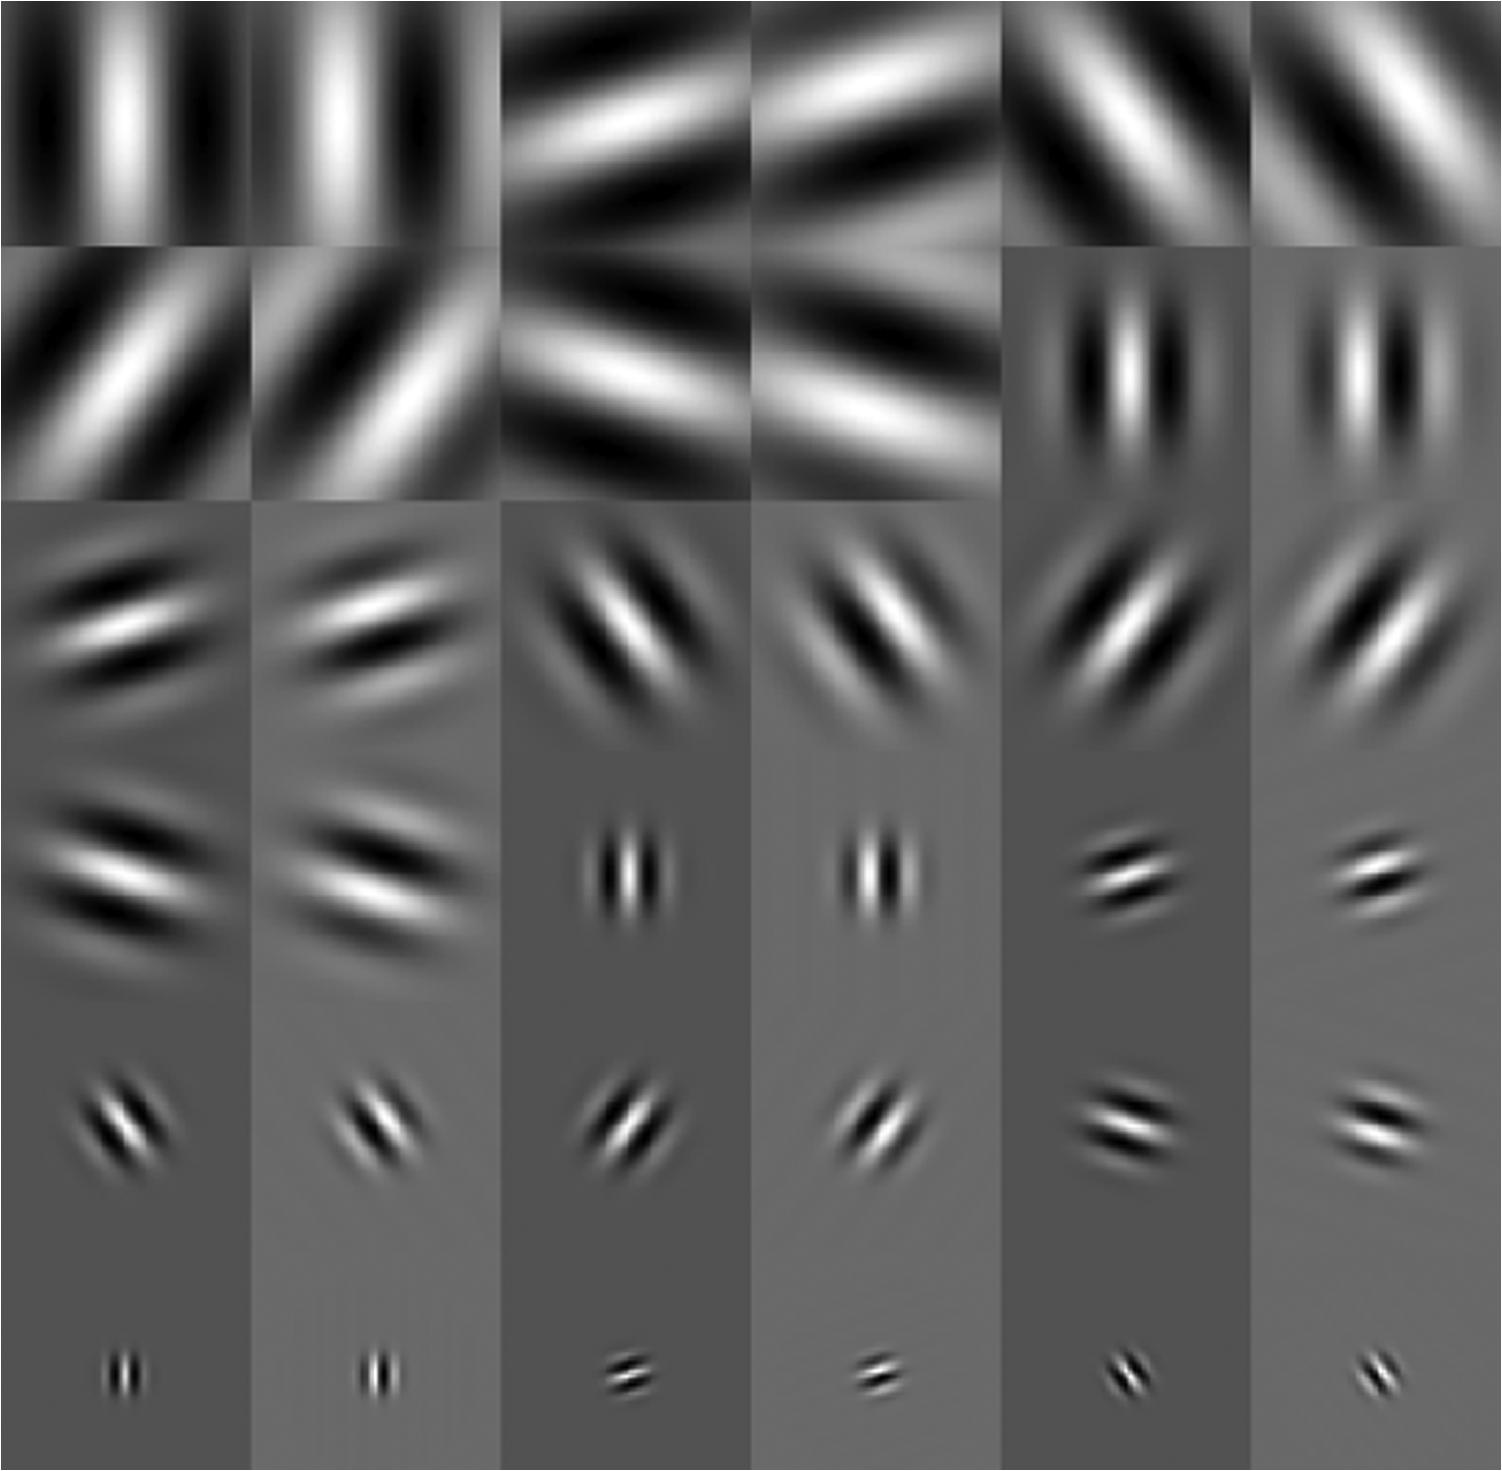 Impact of deep image super-resolution on binary signal